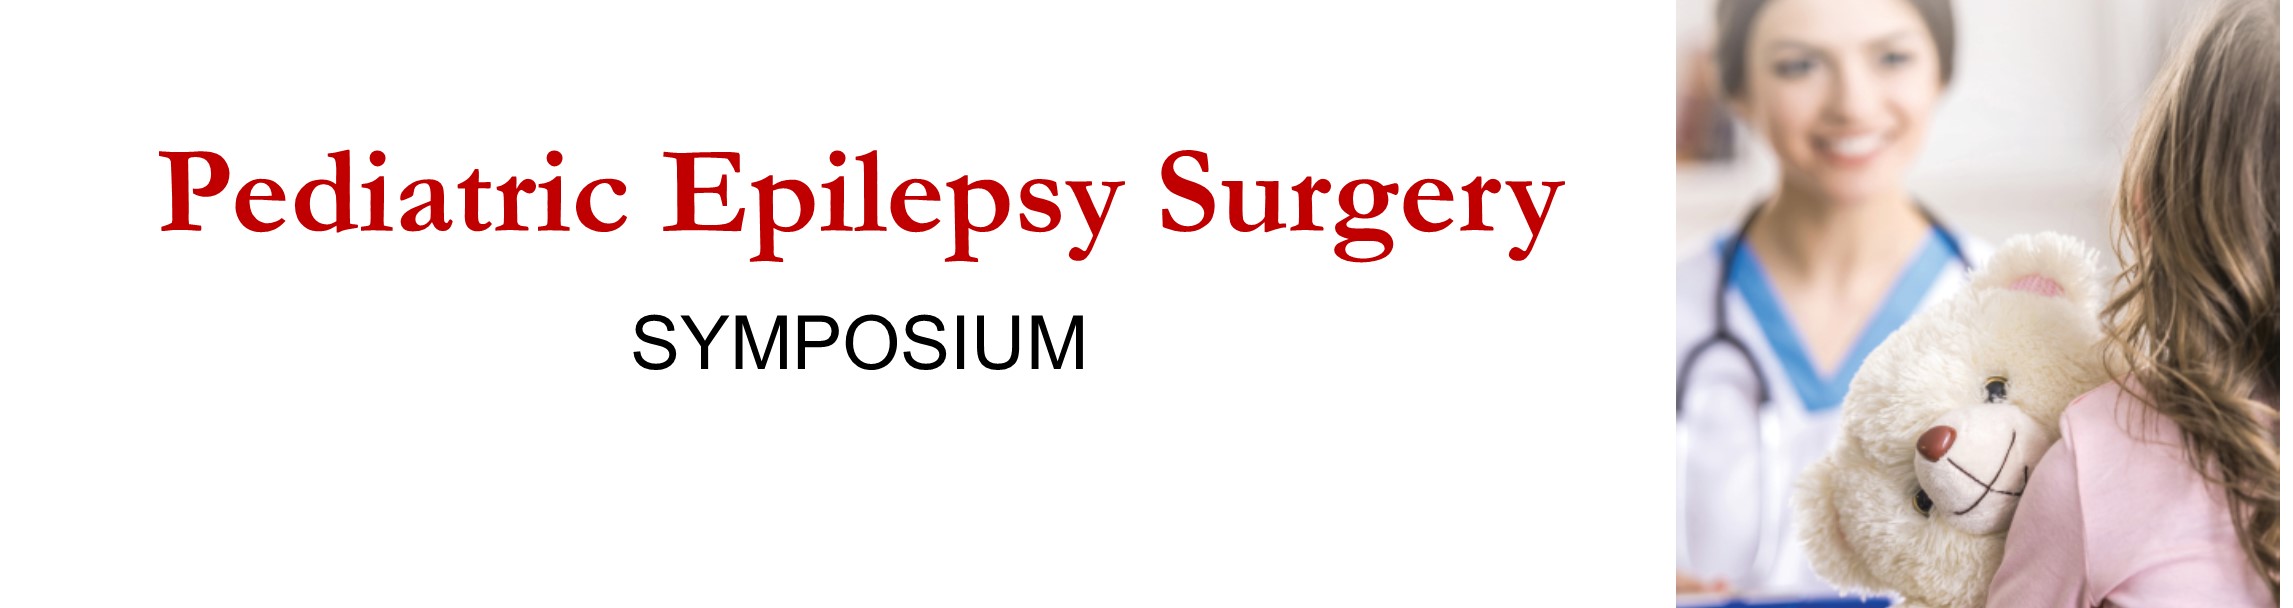 Pediatric Epilepsy Surgery Symposium Banner